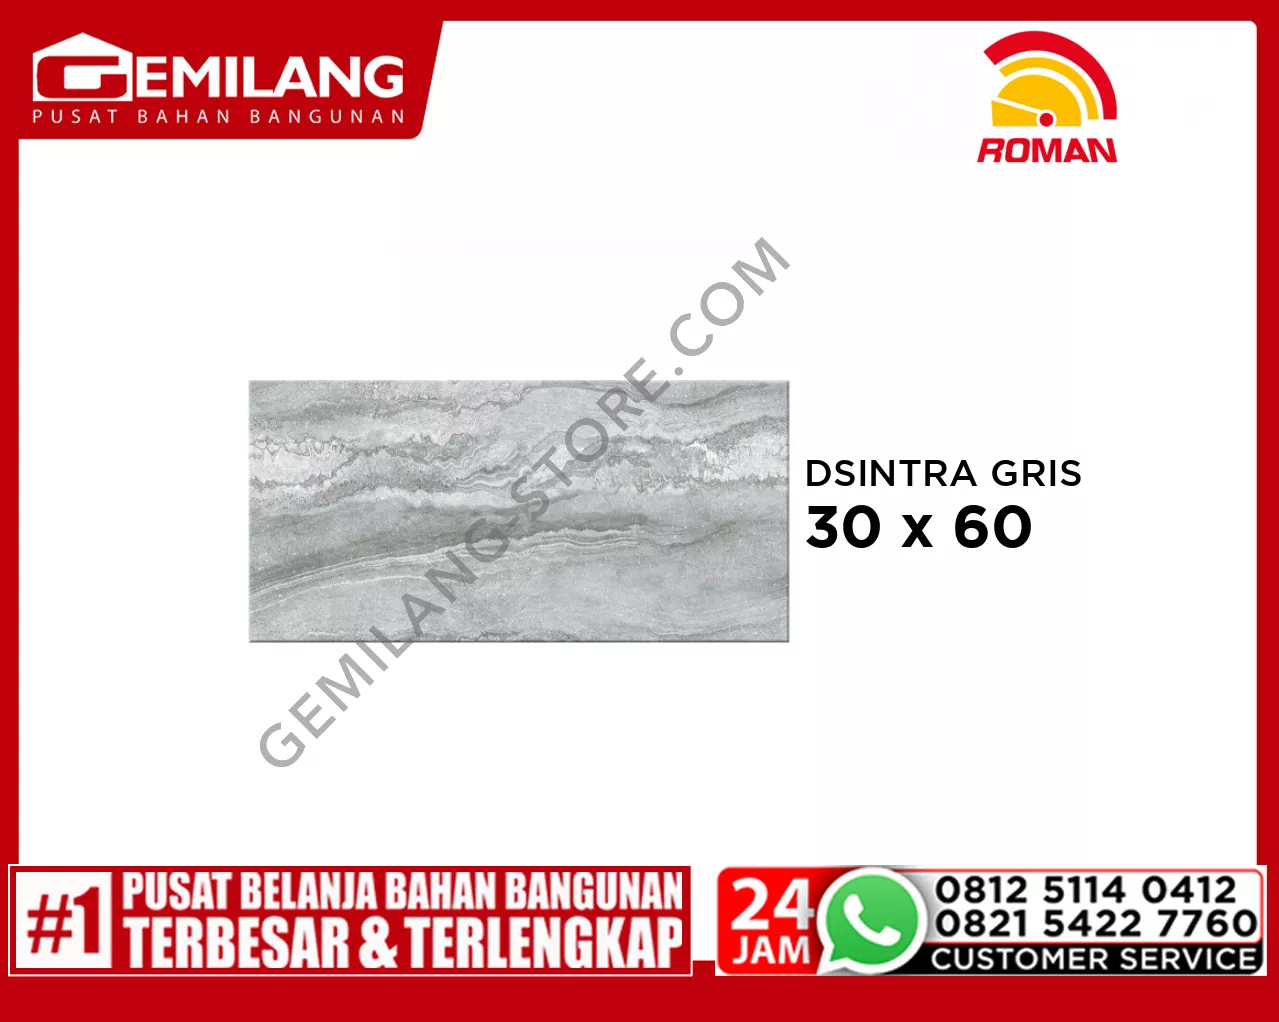 ROMAN DSINTRA GRIS (W63625T) 30 x 60